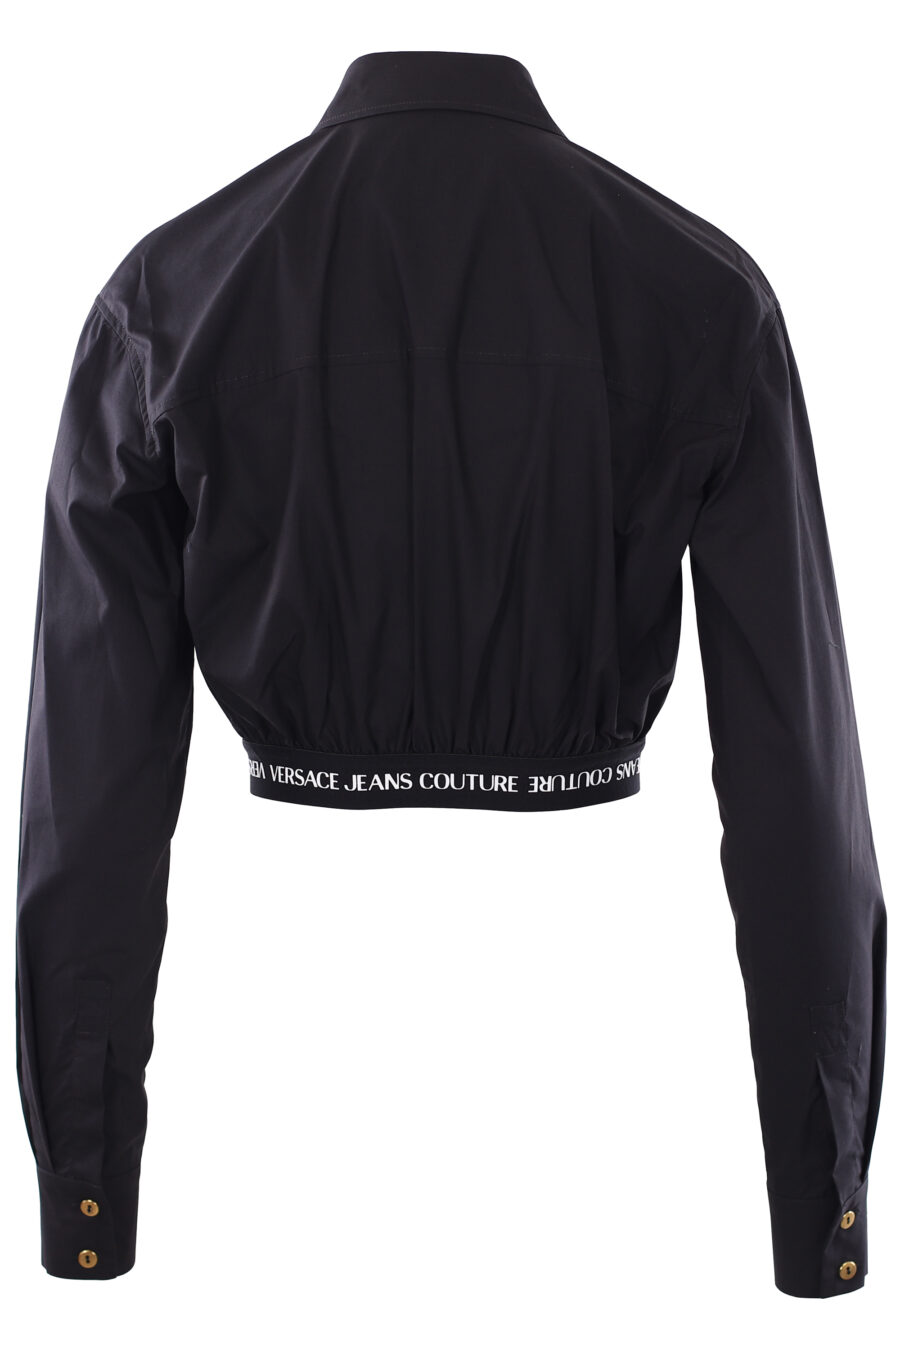 Black cropped long sleeve shirt with ribbon logo - IMG 0278